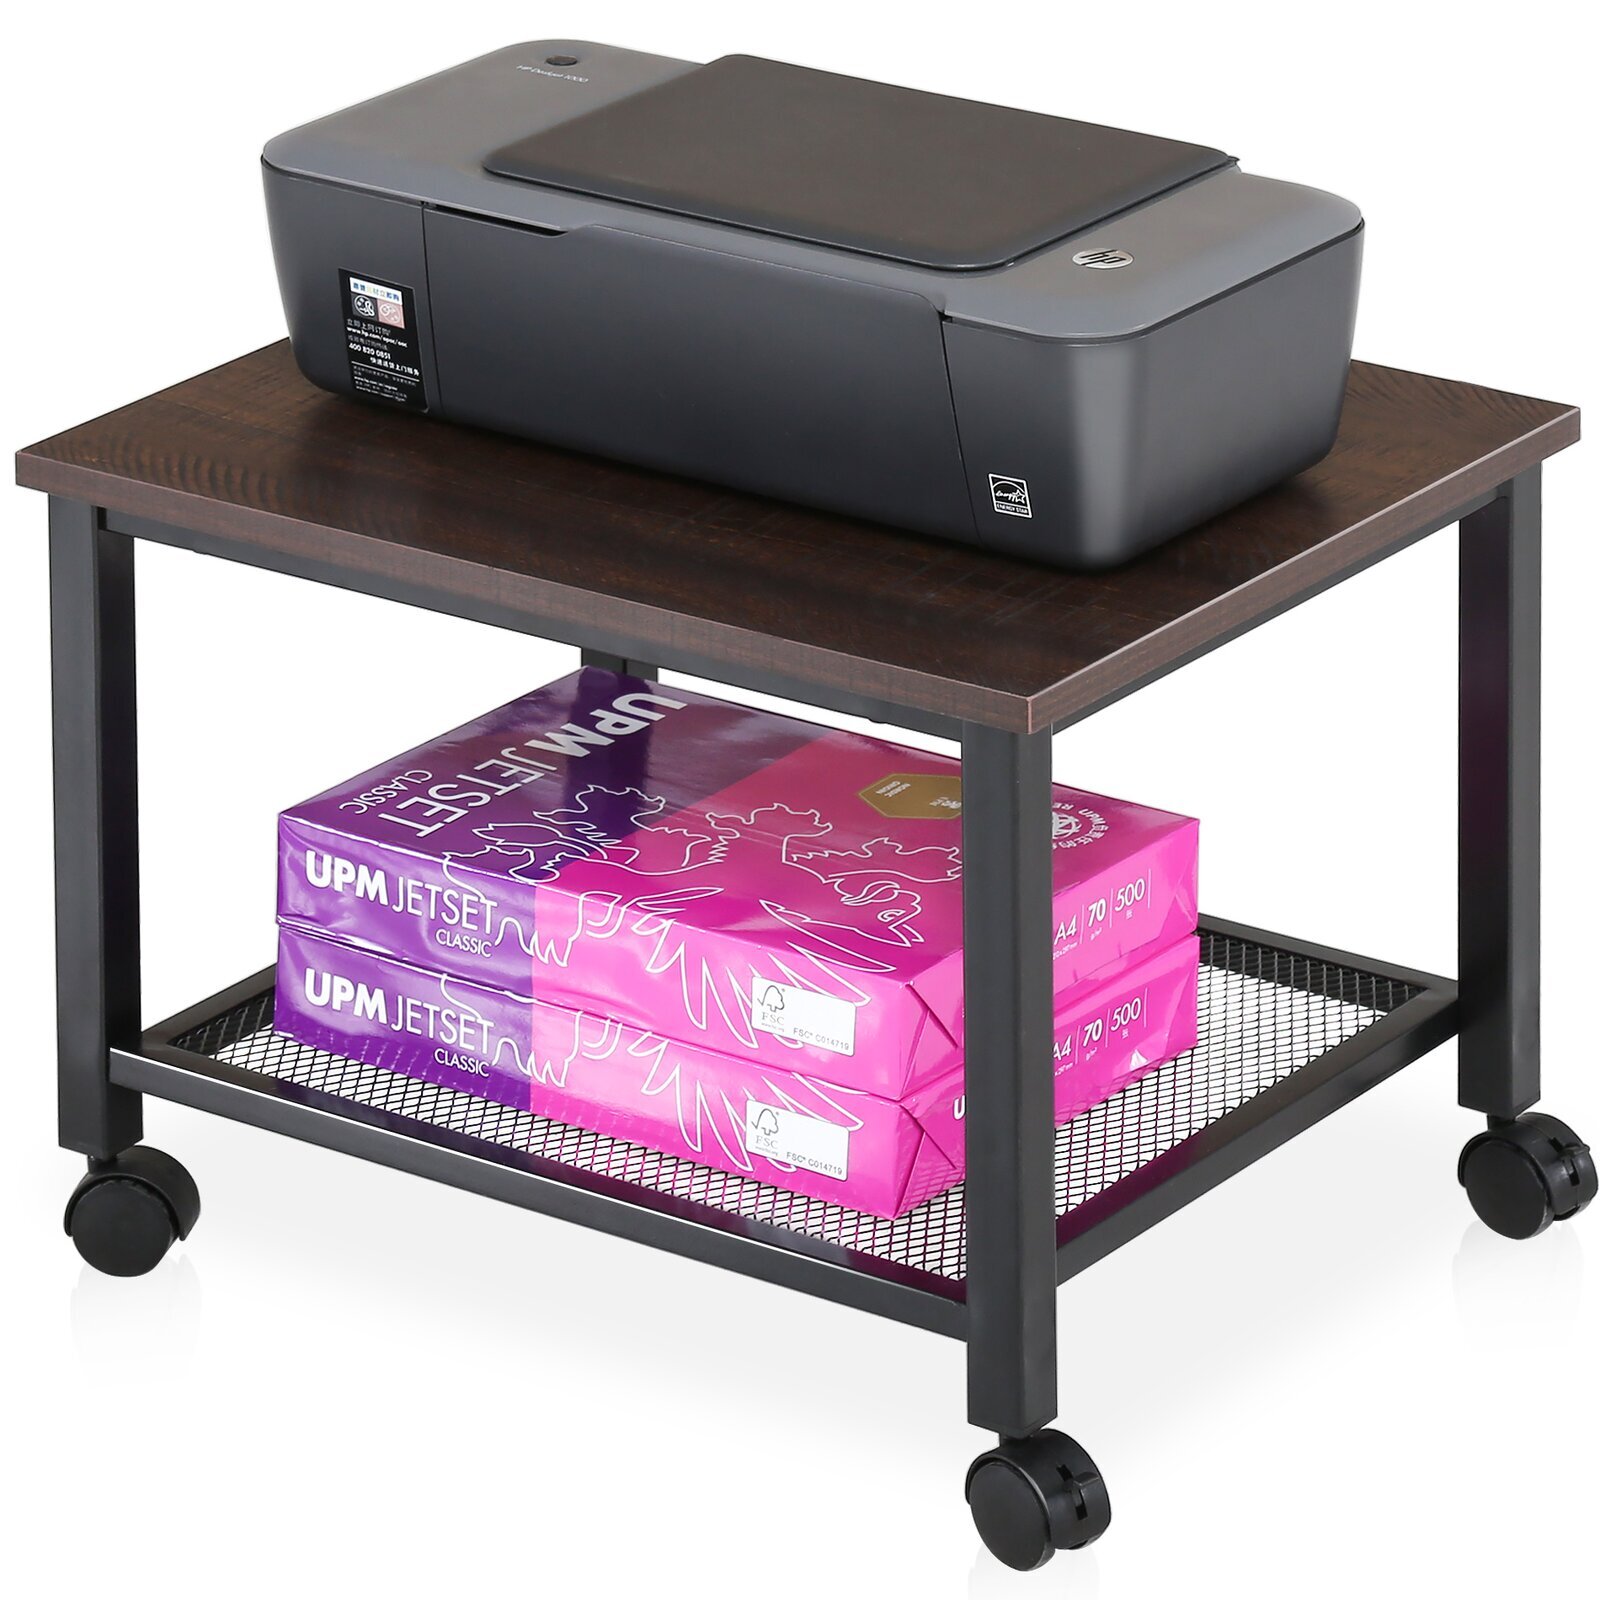 Budget friendly & space saving printer table